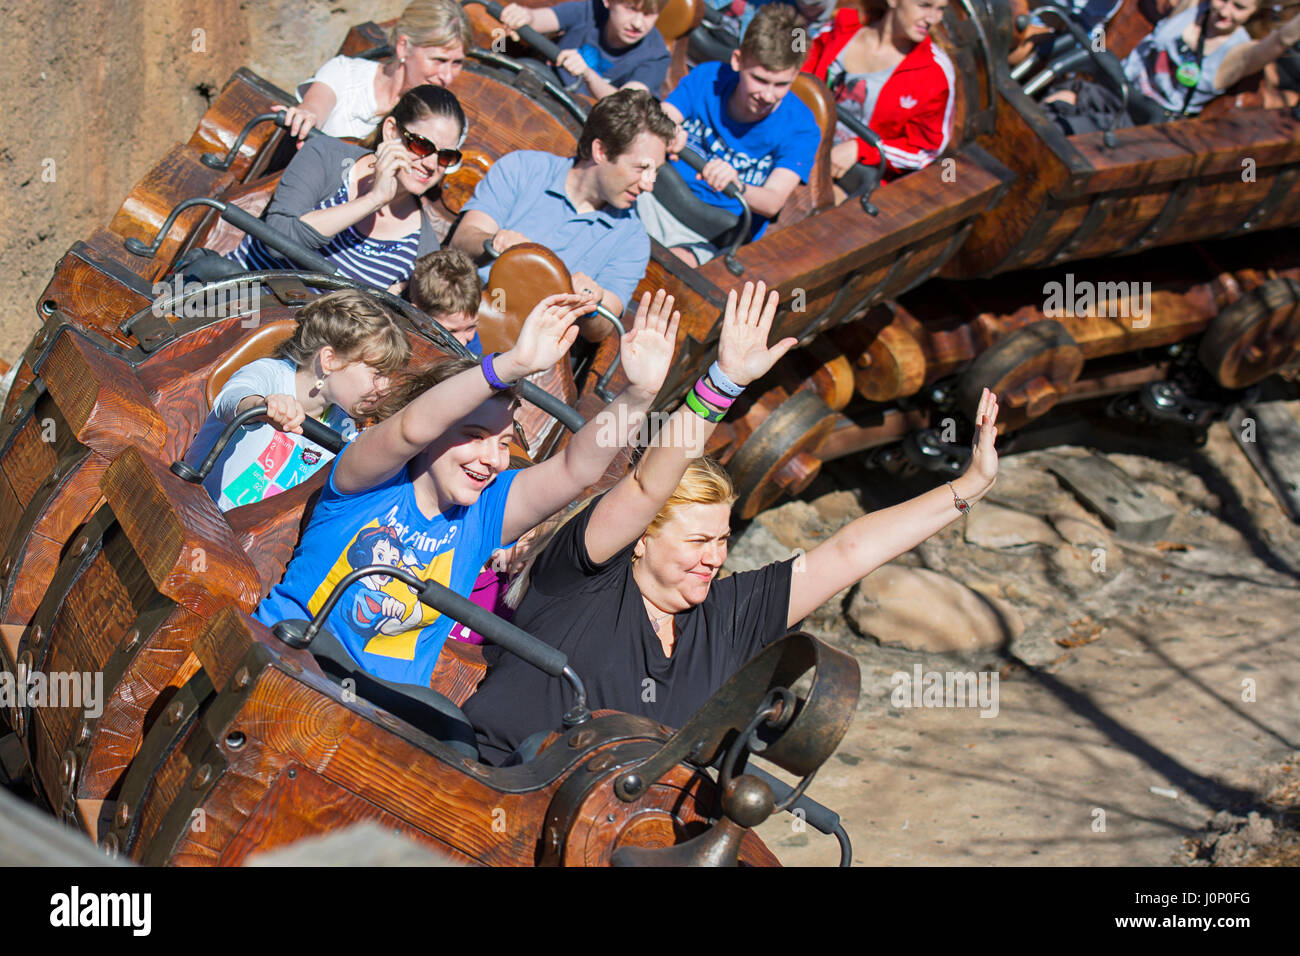 Disney Ride Rides, Sept Nains Le Train de la mine, Disney World, Orlando, Floride Banque D'Images